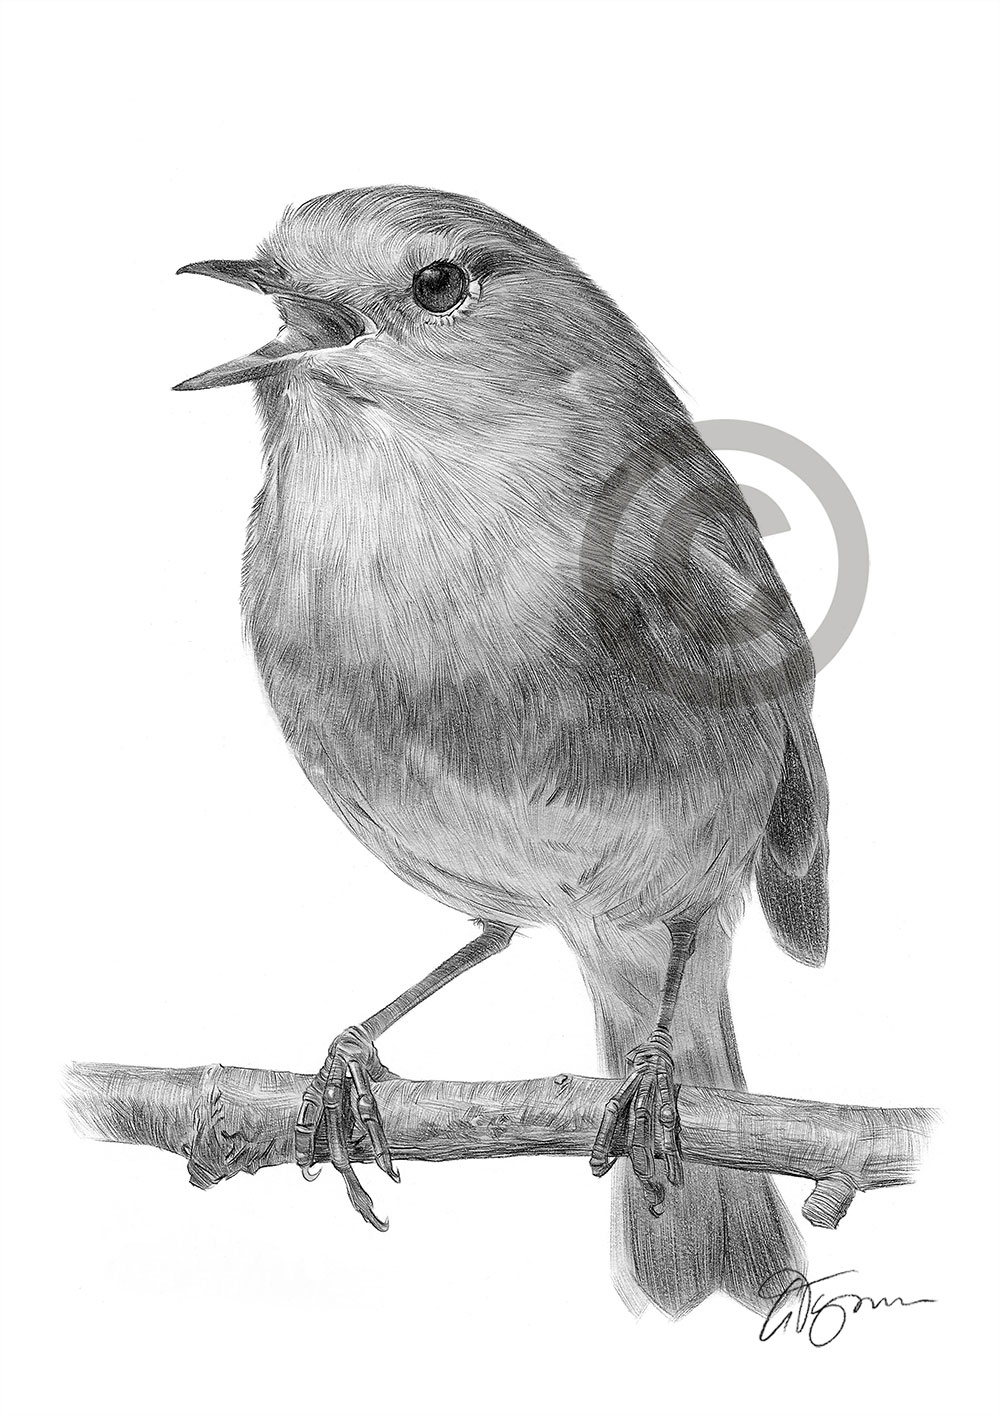 Pencil drawing of a robin redbreast by artist Gary Tymon